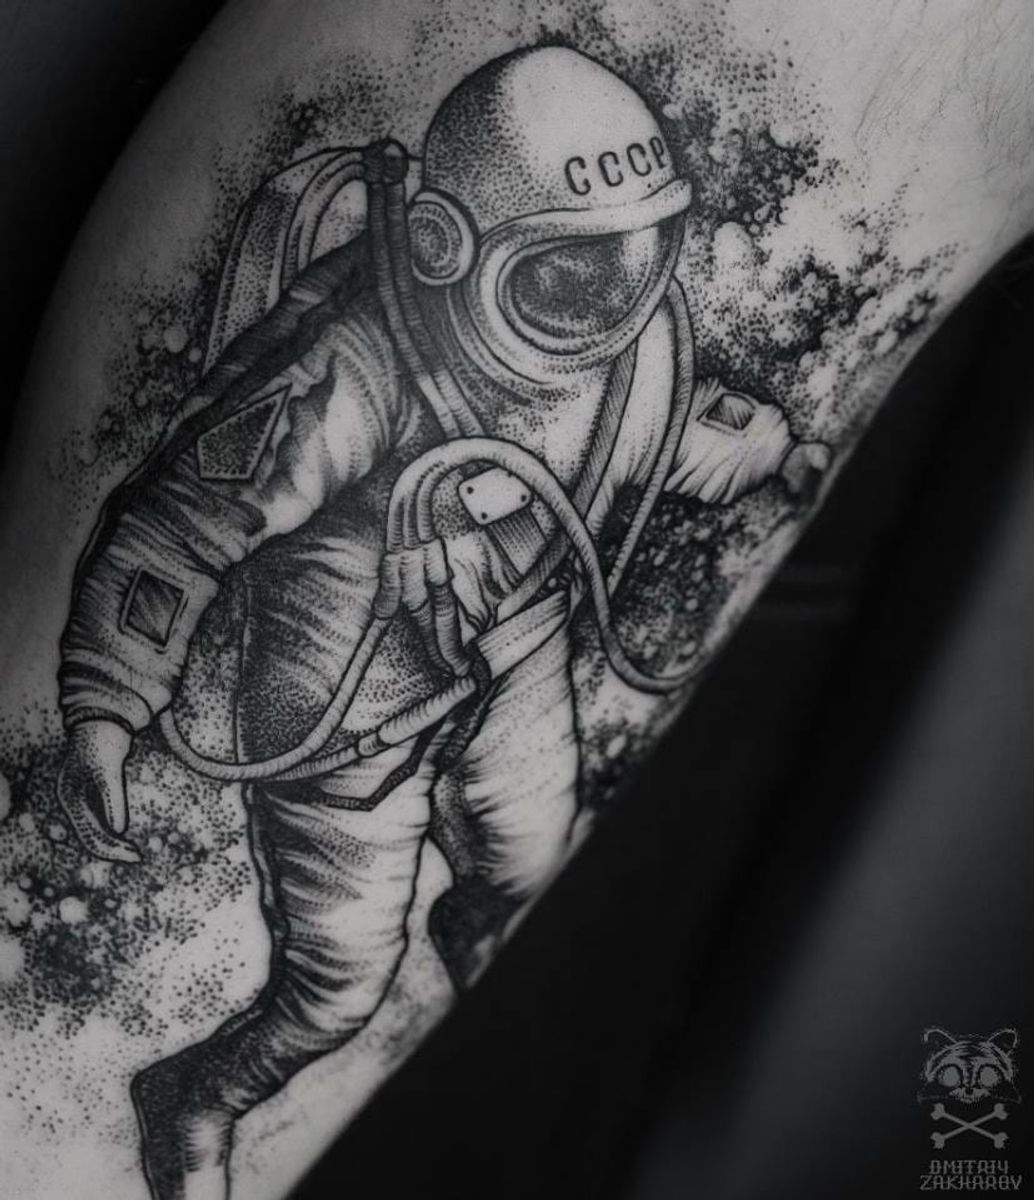 Tattoo uploaded by JenTheRipper • Great work by Dmitriy Zakharov ...